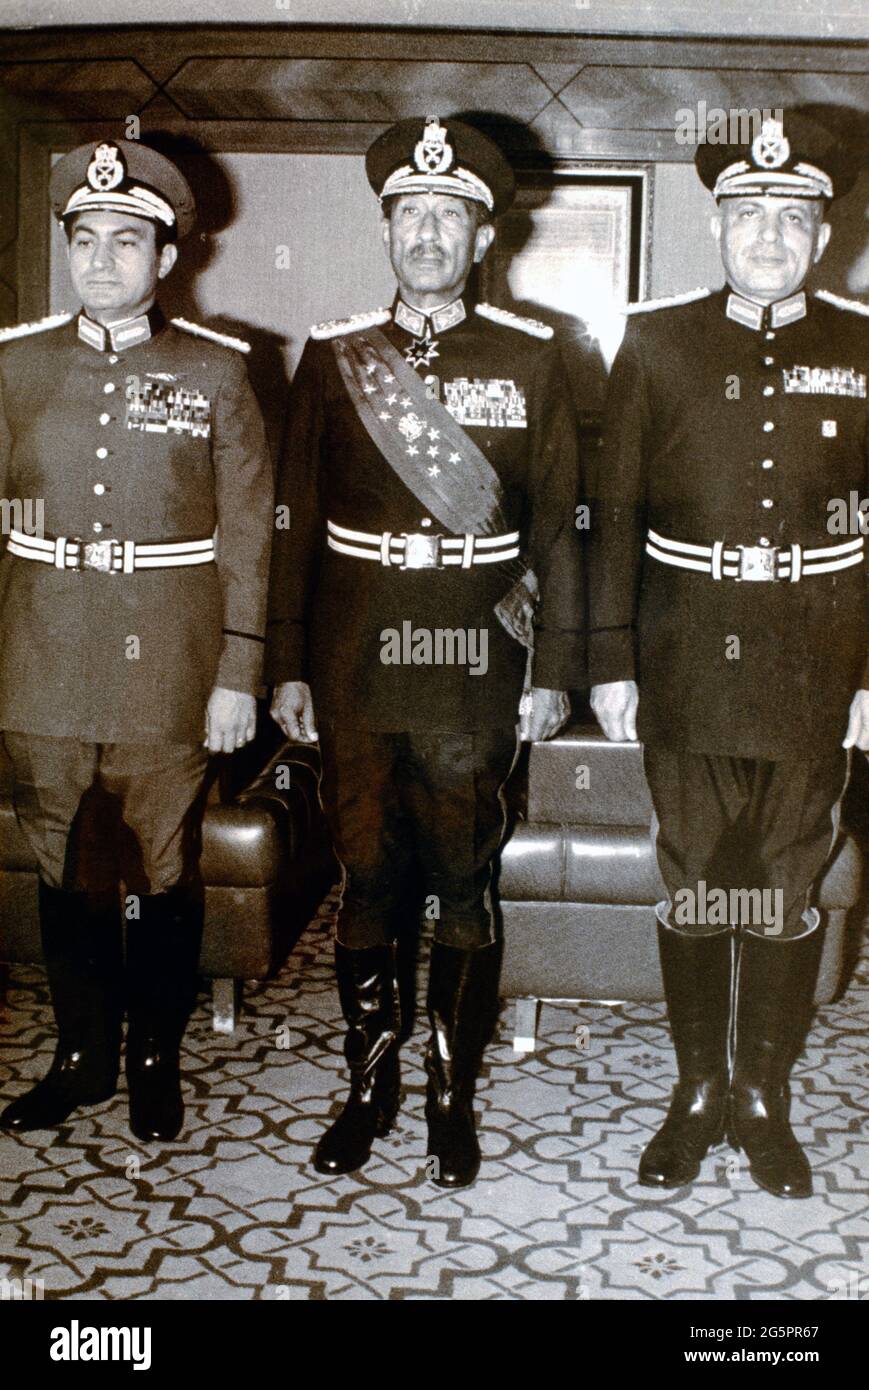 Egypt -Anwar Sadat With Hosni Mubarak & Abu Ghazala In Uniform Just Before Assassination Stock Photo